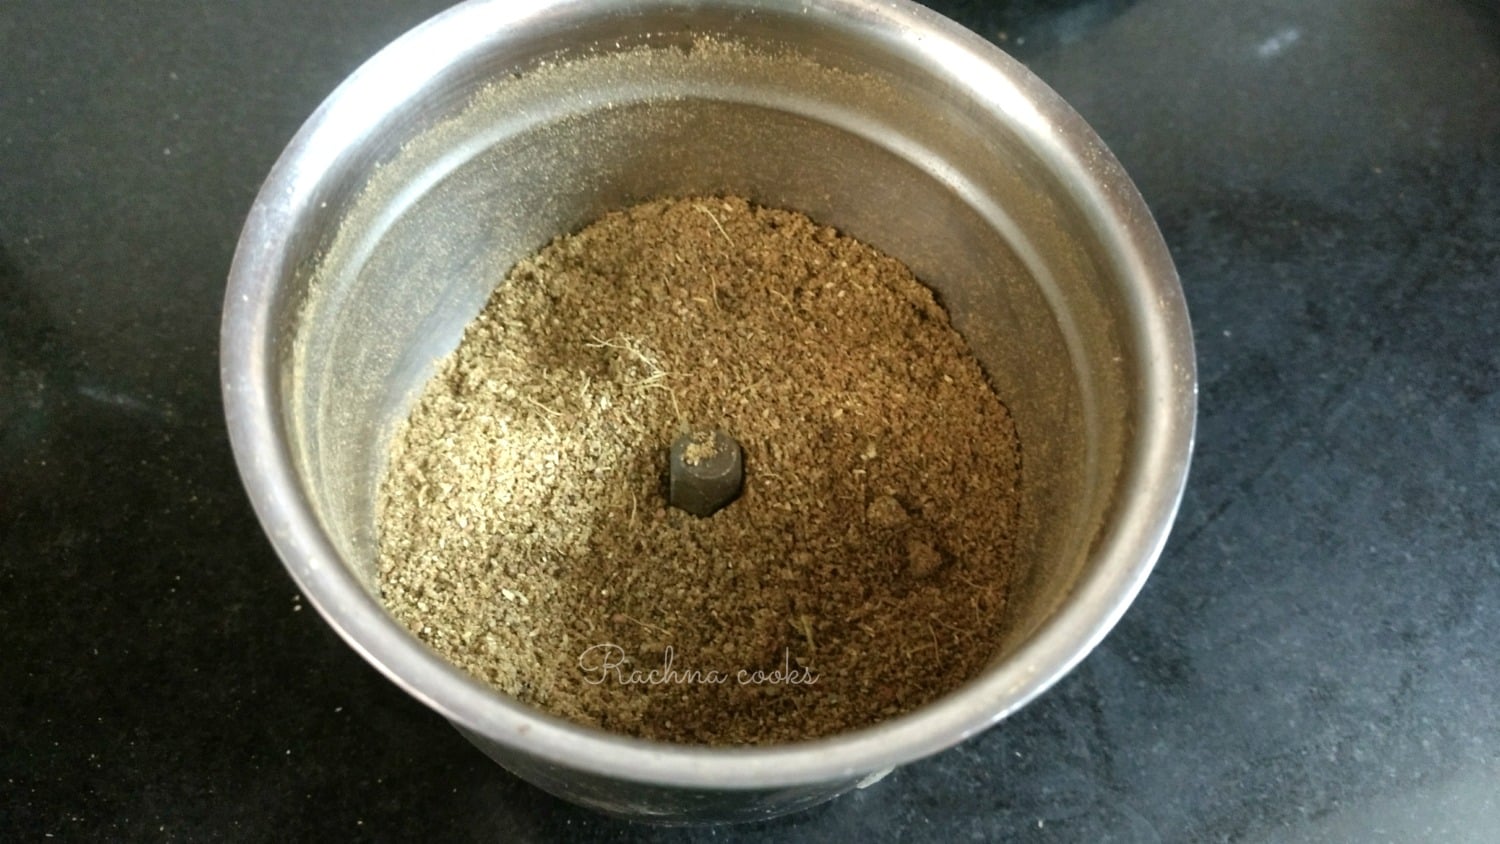 Garam masala powder after blending in a blender jar.